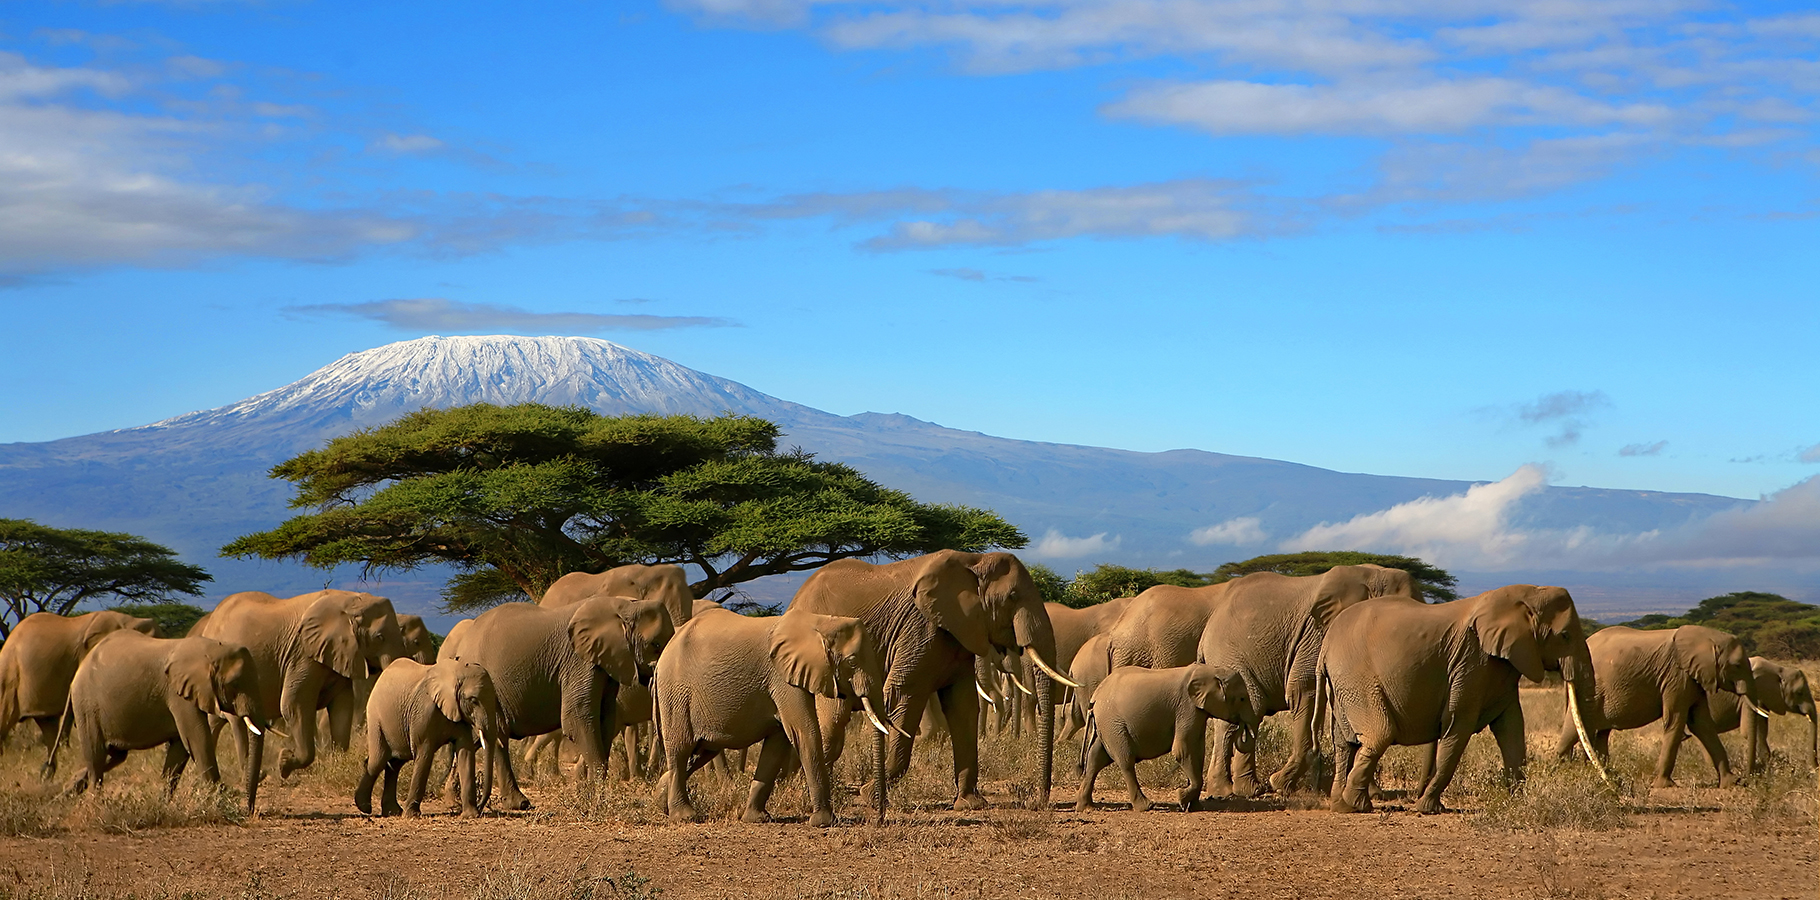 Journey to the summit of Mount Kilimanjaro with Exploradus